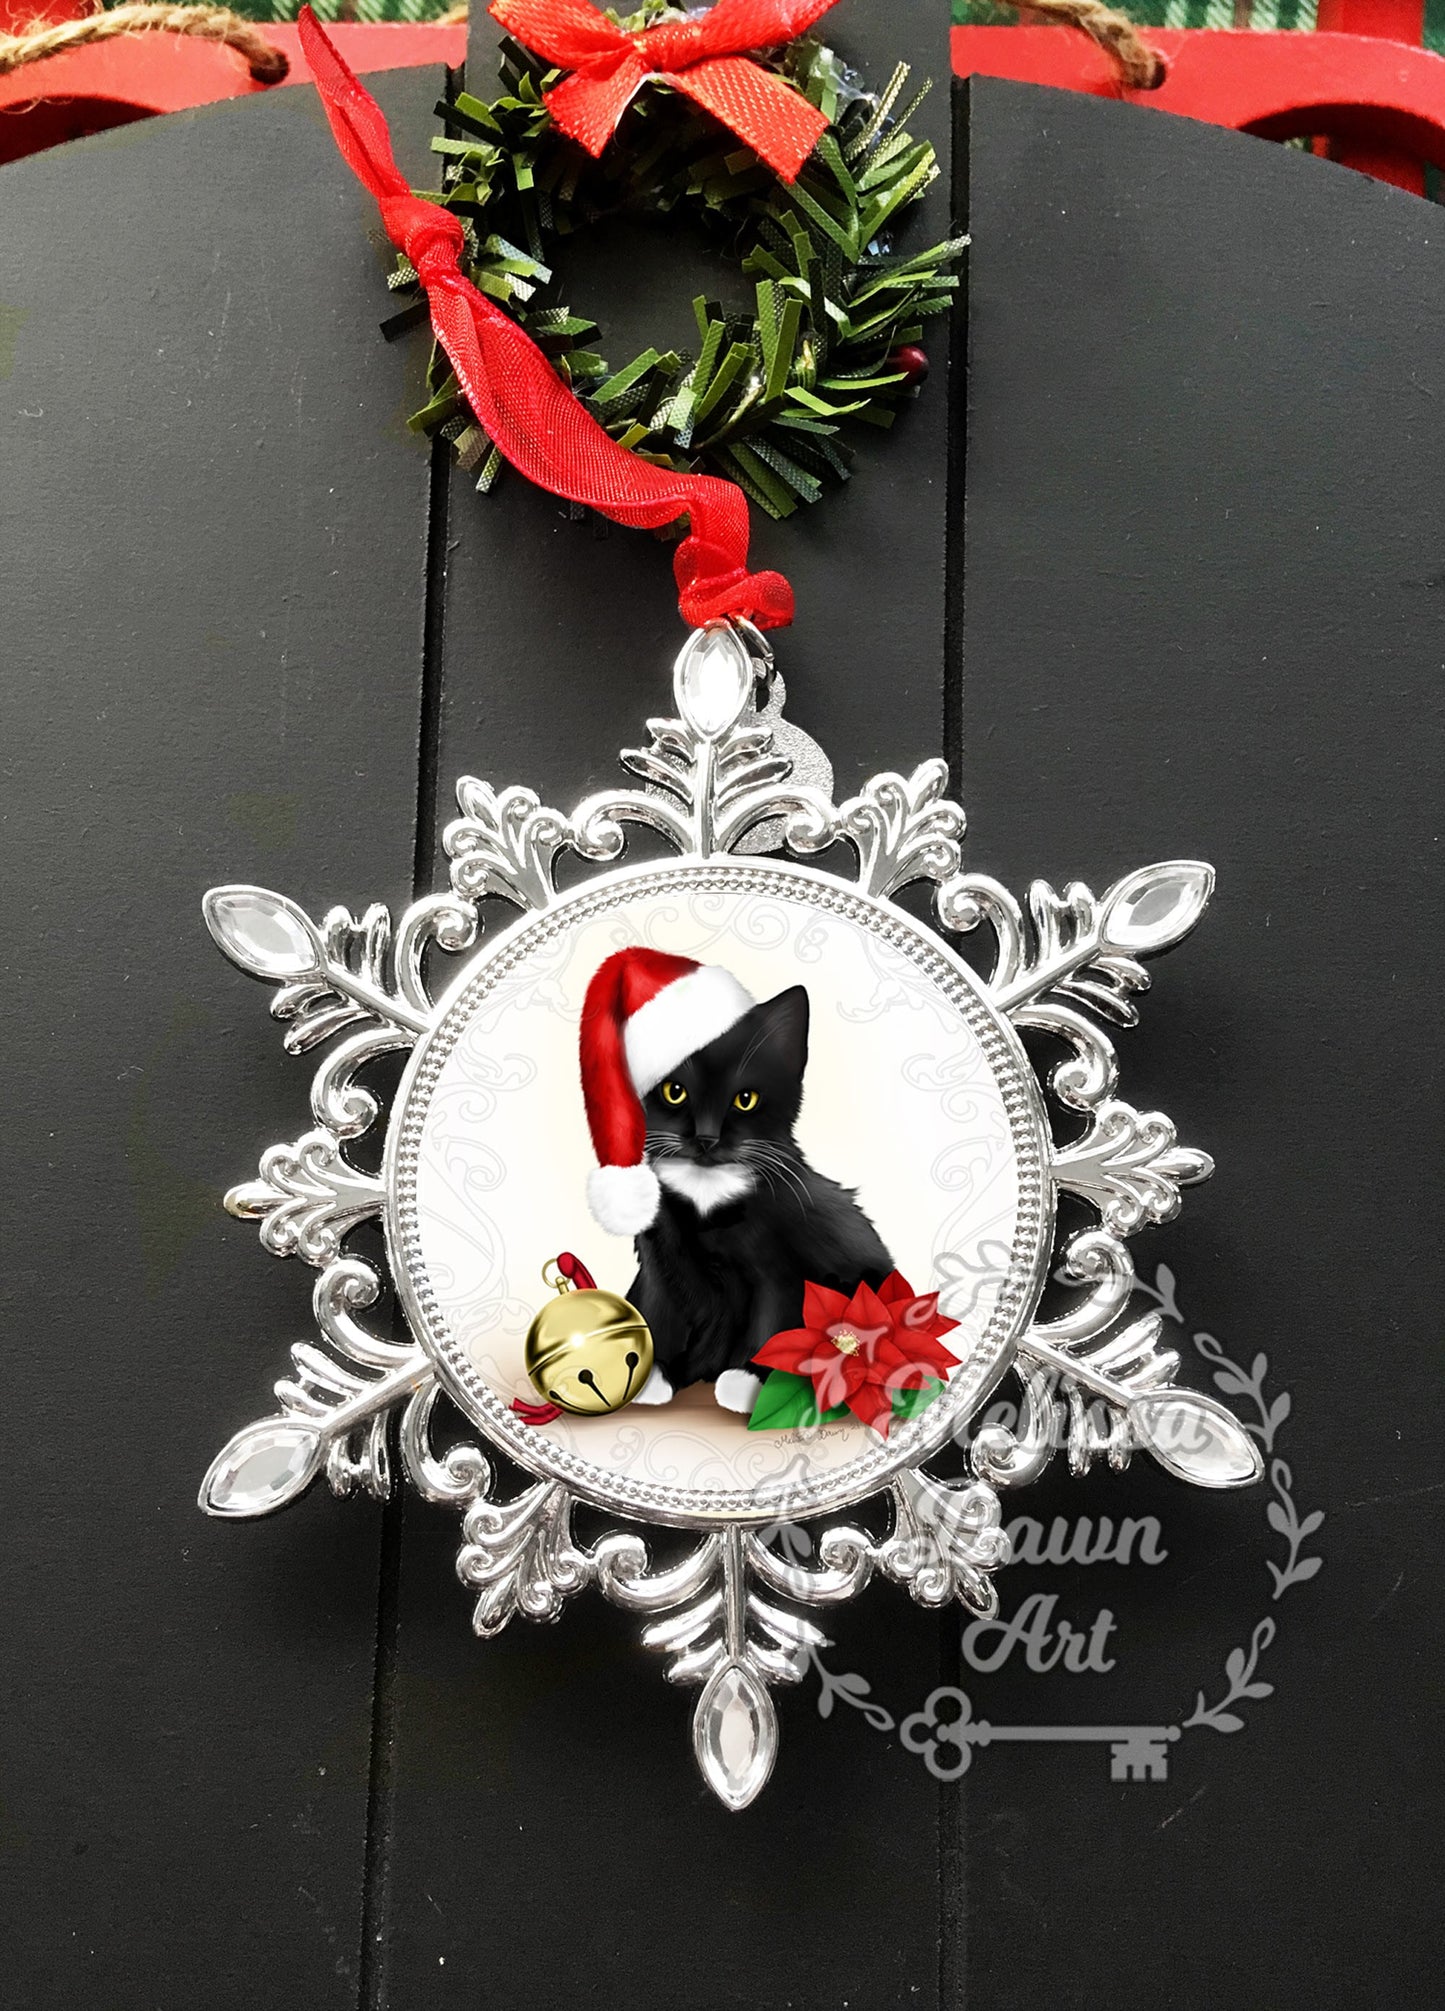 Tuxedo Cat Ornament / Personalized Cat Ornament / Cat Ornament / Cat Lovers Gift / Santa Cat Ornament / Cat in Santa Hat / Tuxedo Ornament